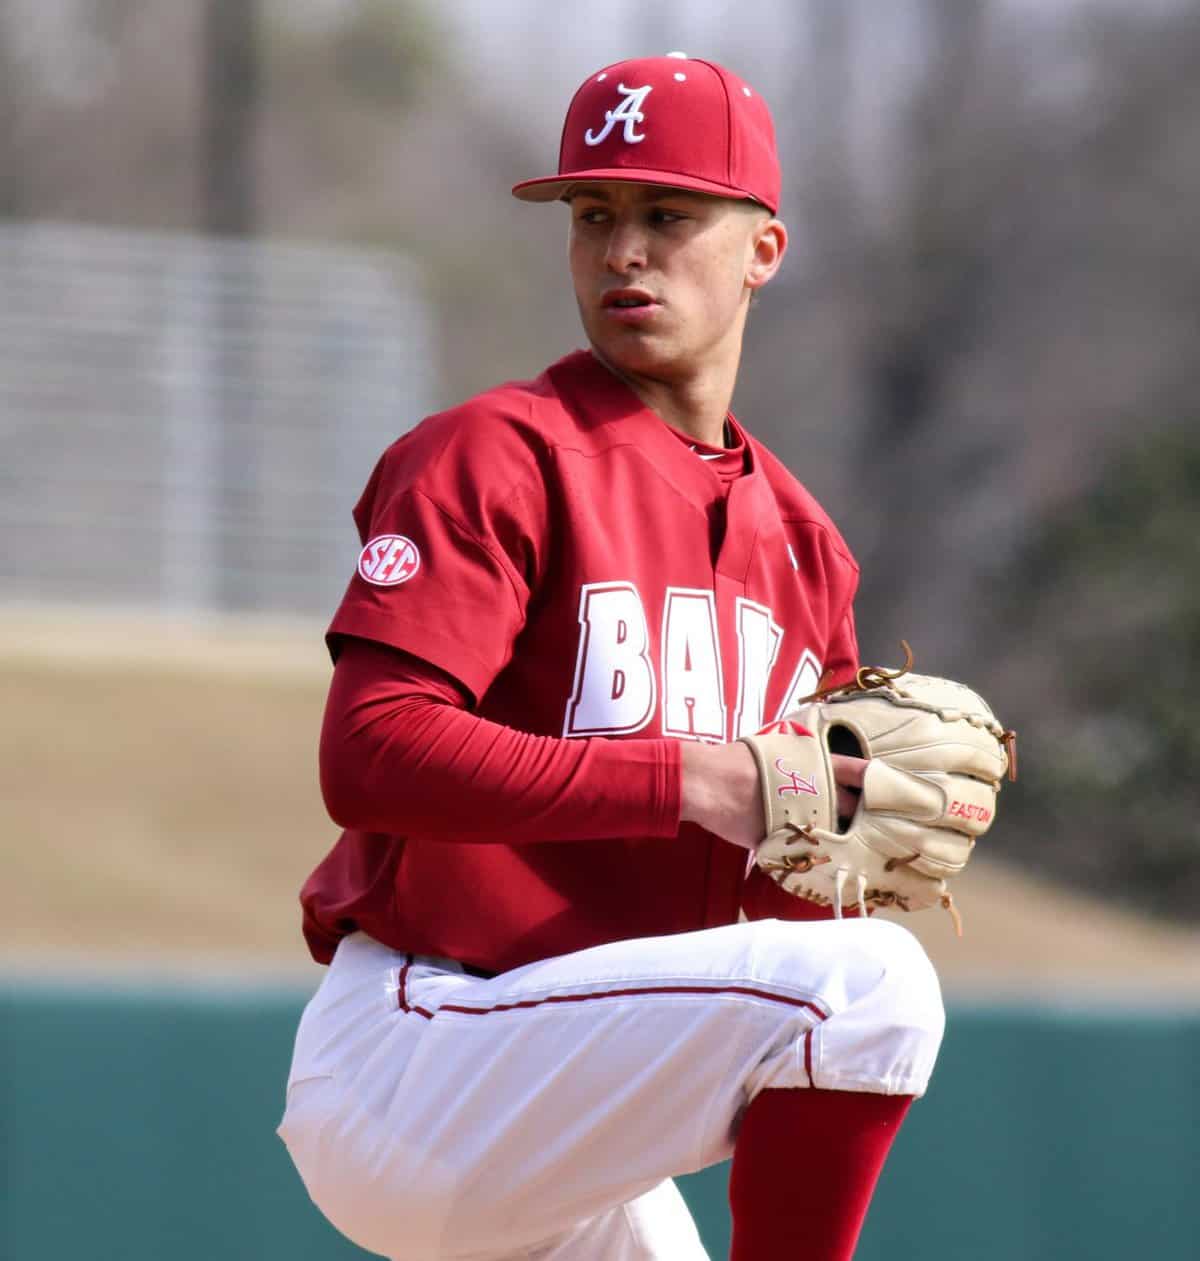 Alabama Owen Diodati (16) runs to first during an NCAA baseball